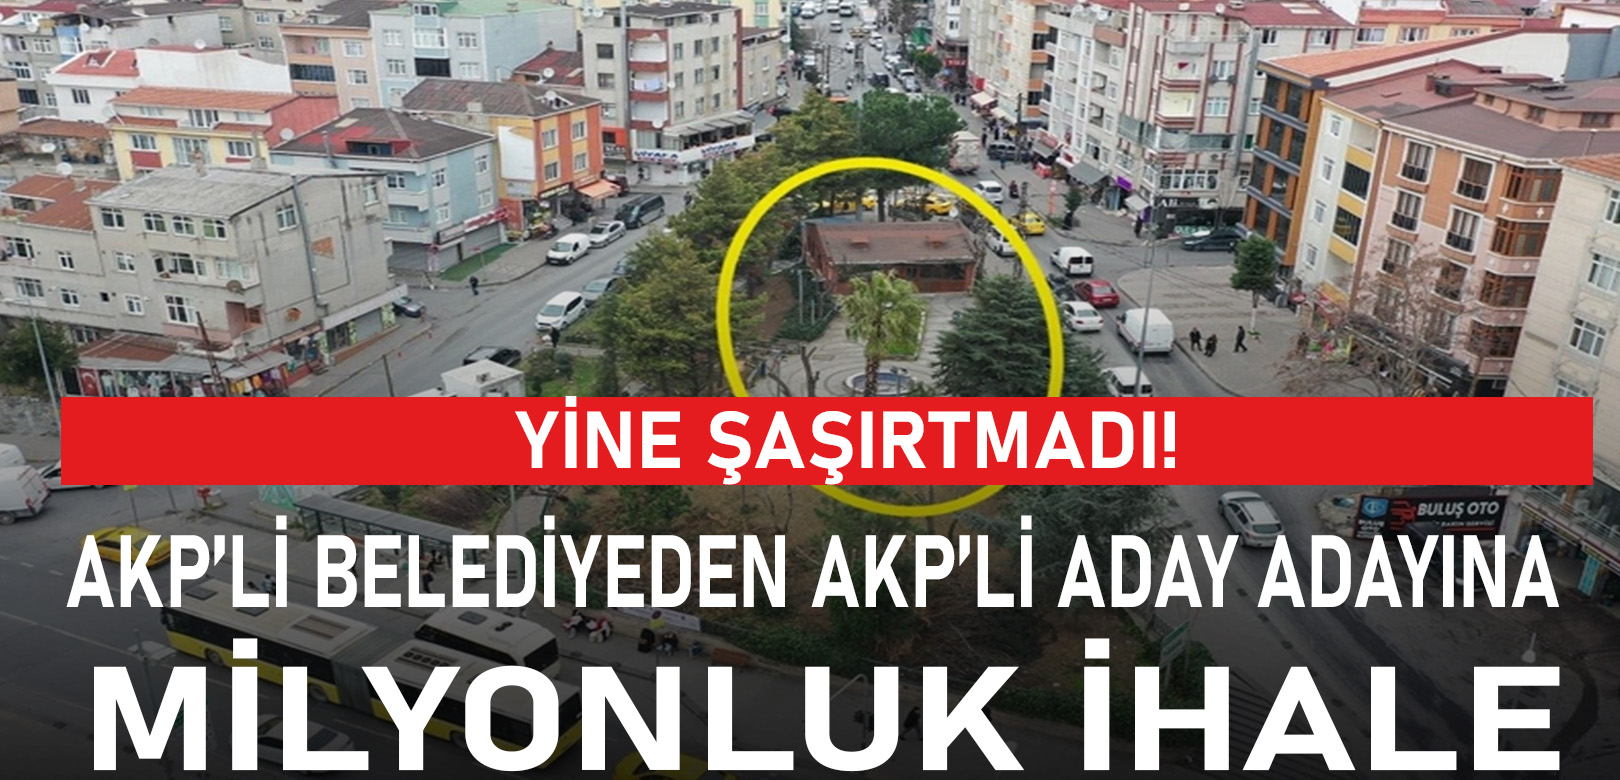 AKP’li belediyeden AKP’li aday adayına milyonluk ihale